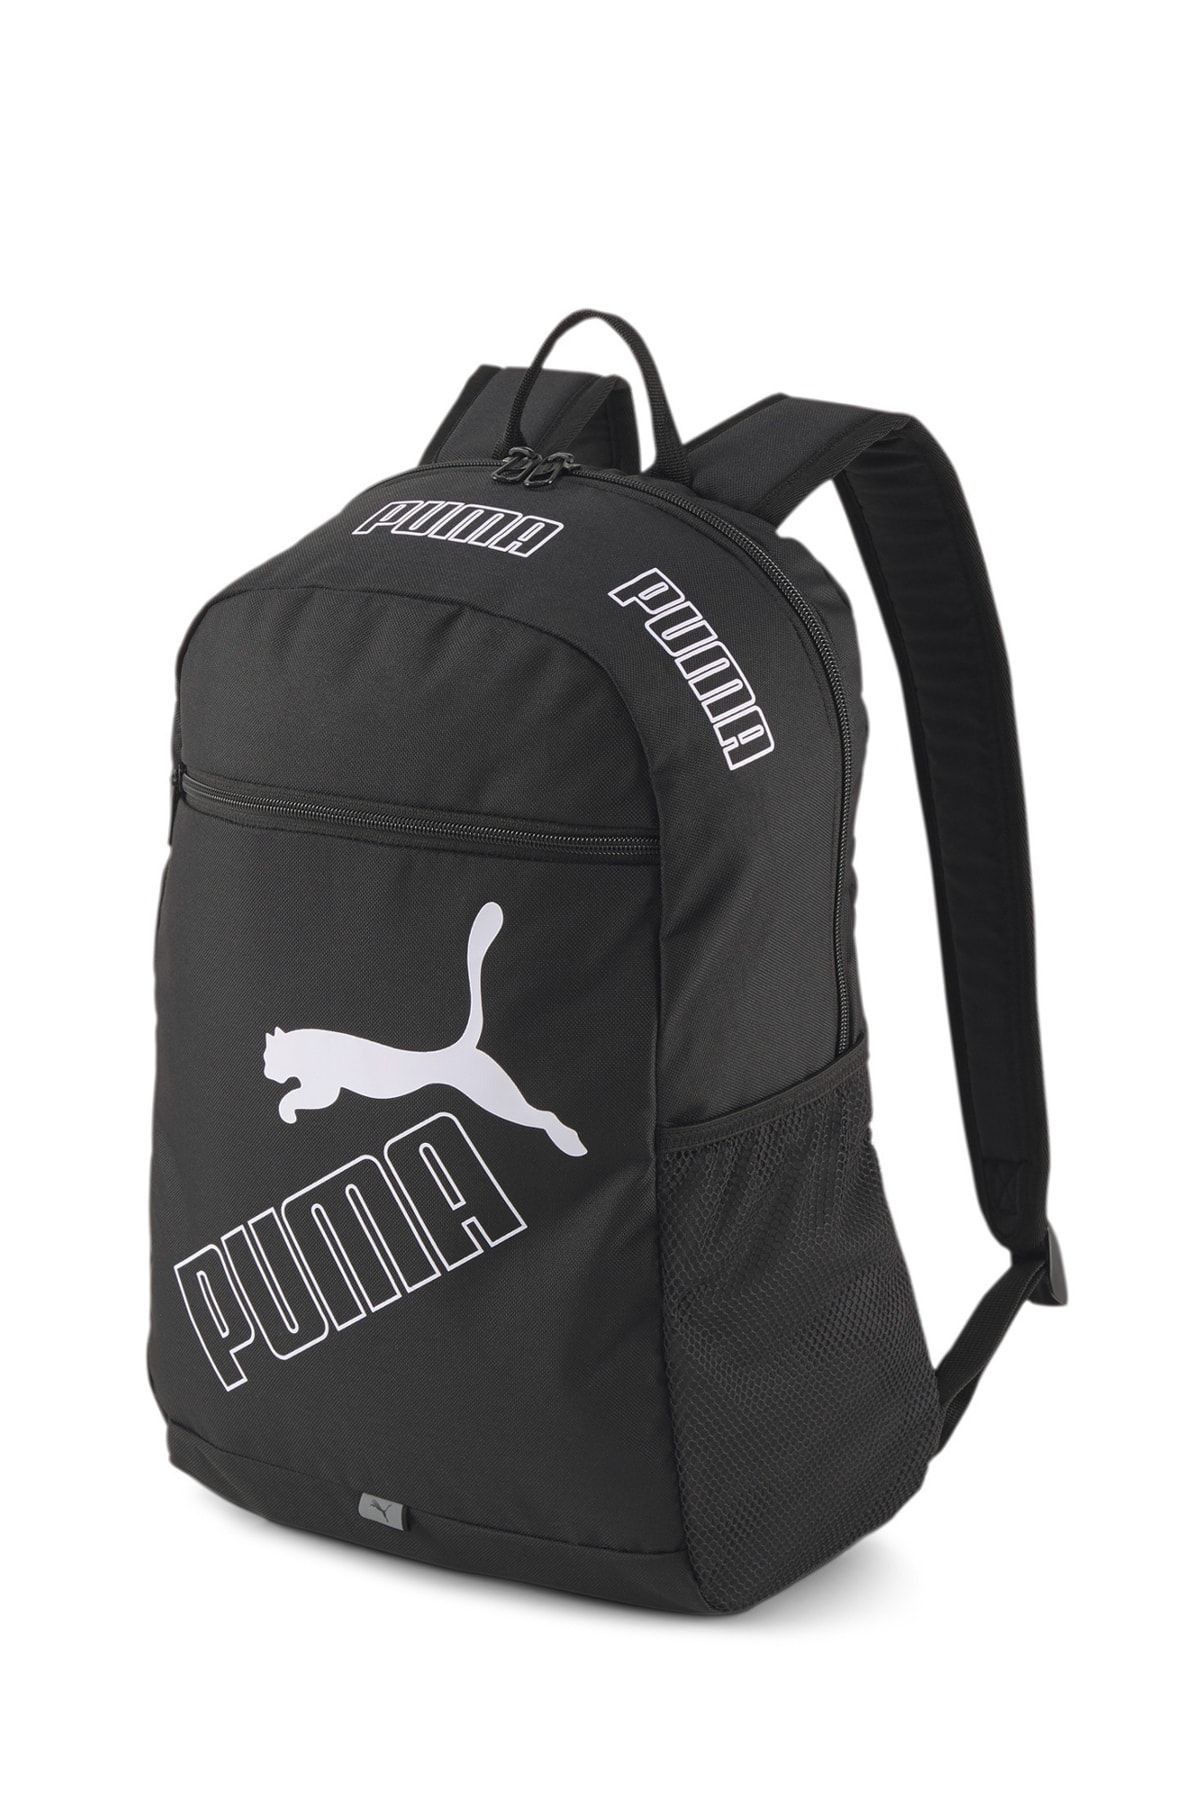 Puma Phase Backpack - Siyah Sırt Çantası